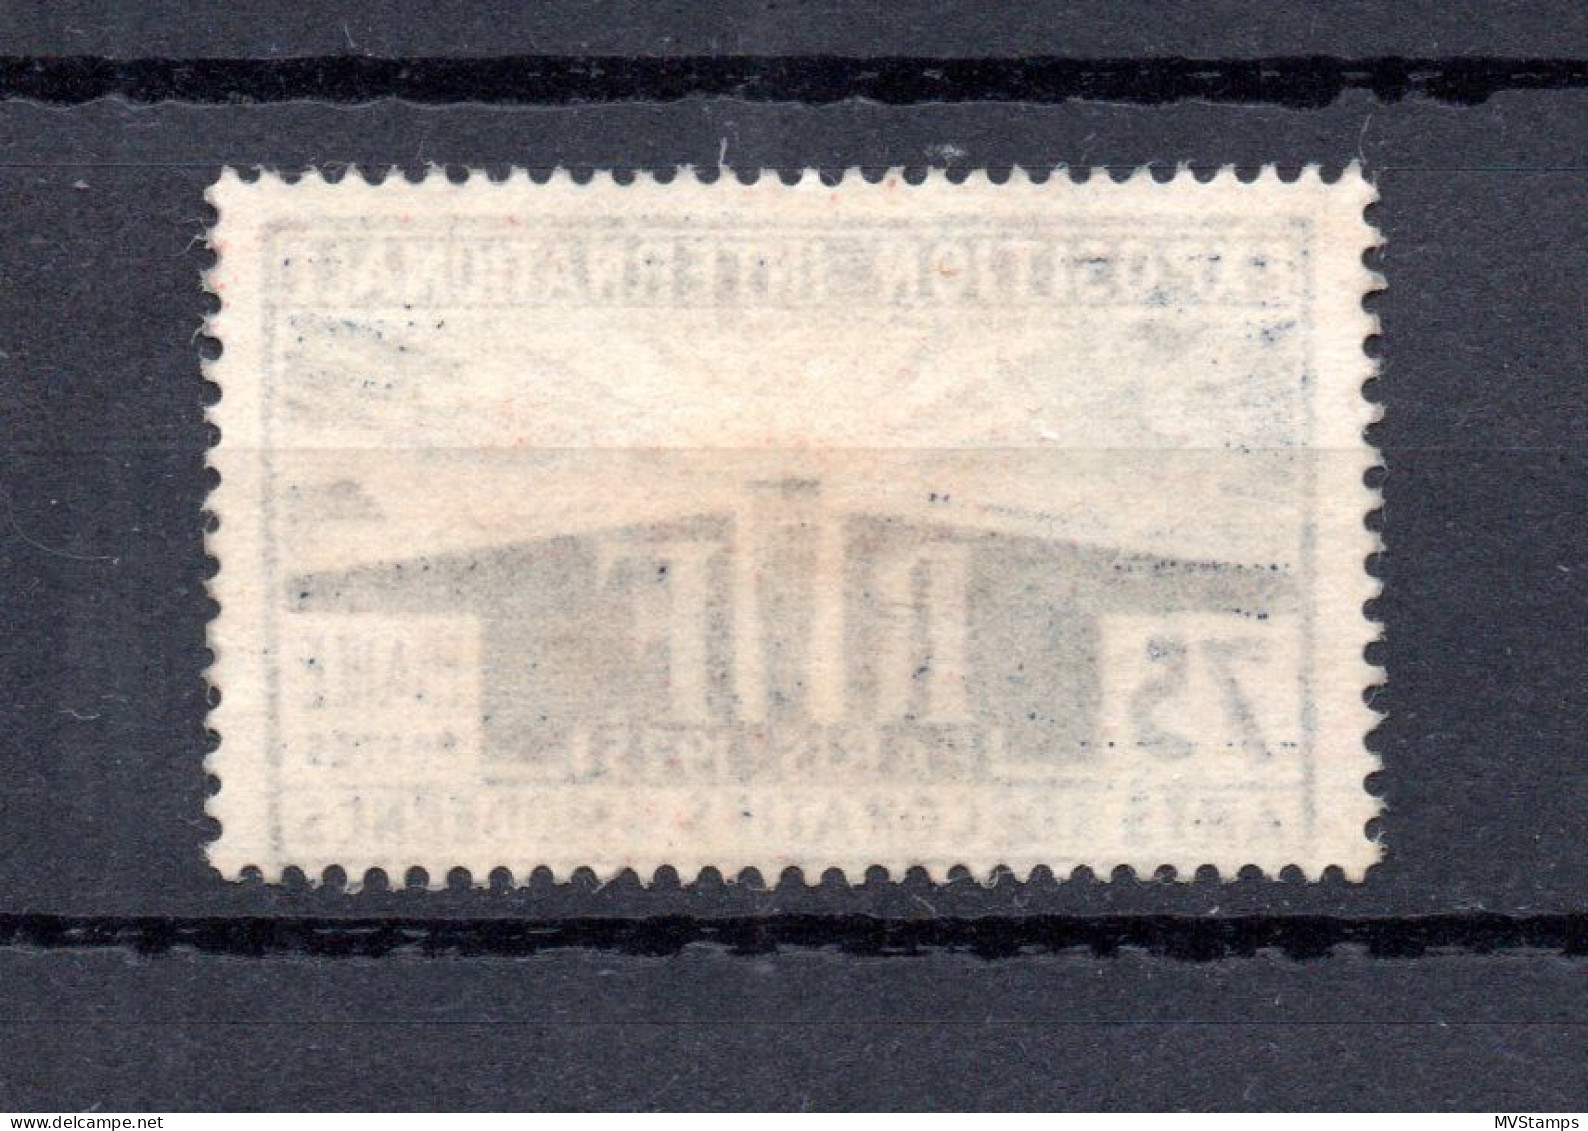 France 1925 Old Art Exhibition Paris Stamp (Michel 180) Nice MNH - Nuovi